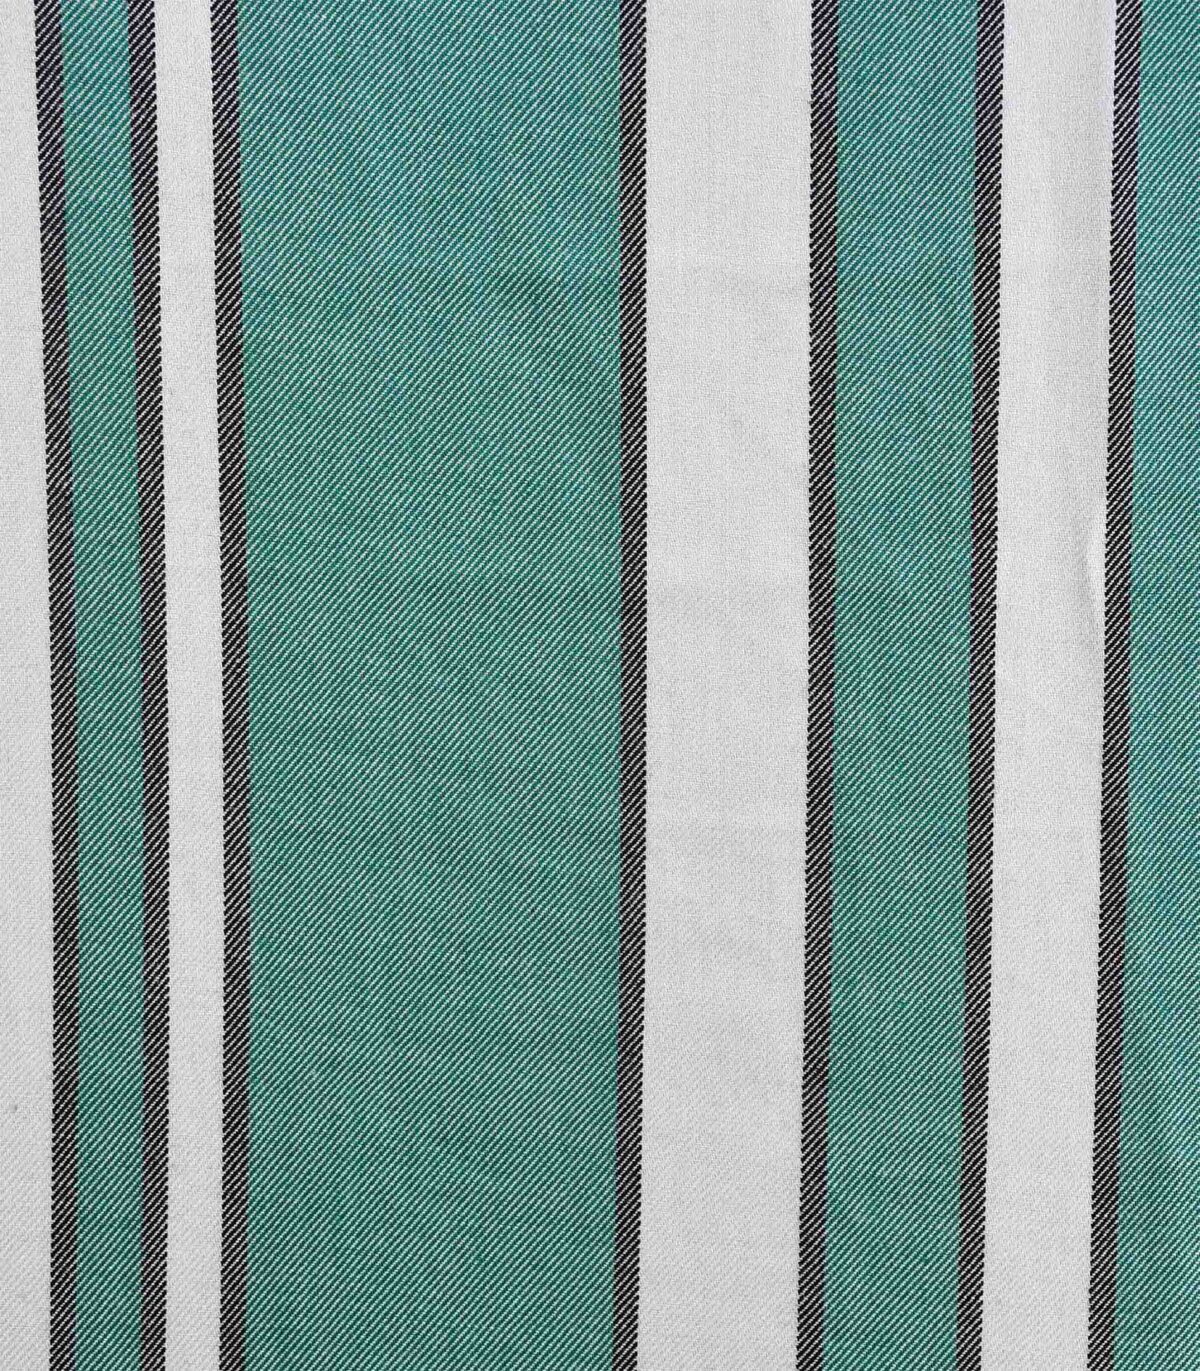 Rayon Green & White Stripe Fabric